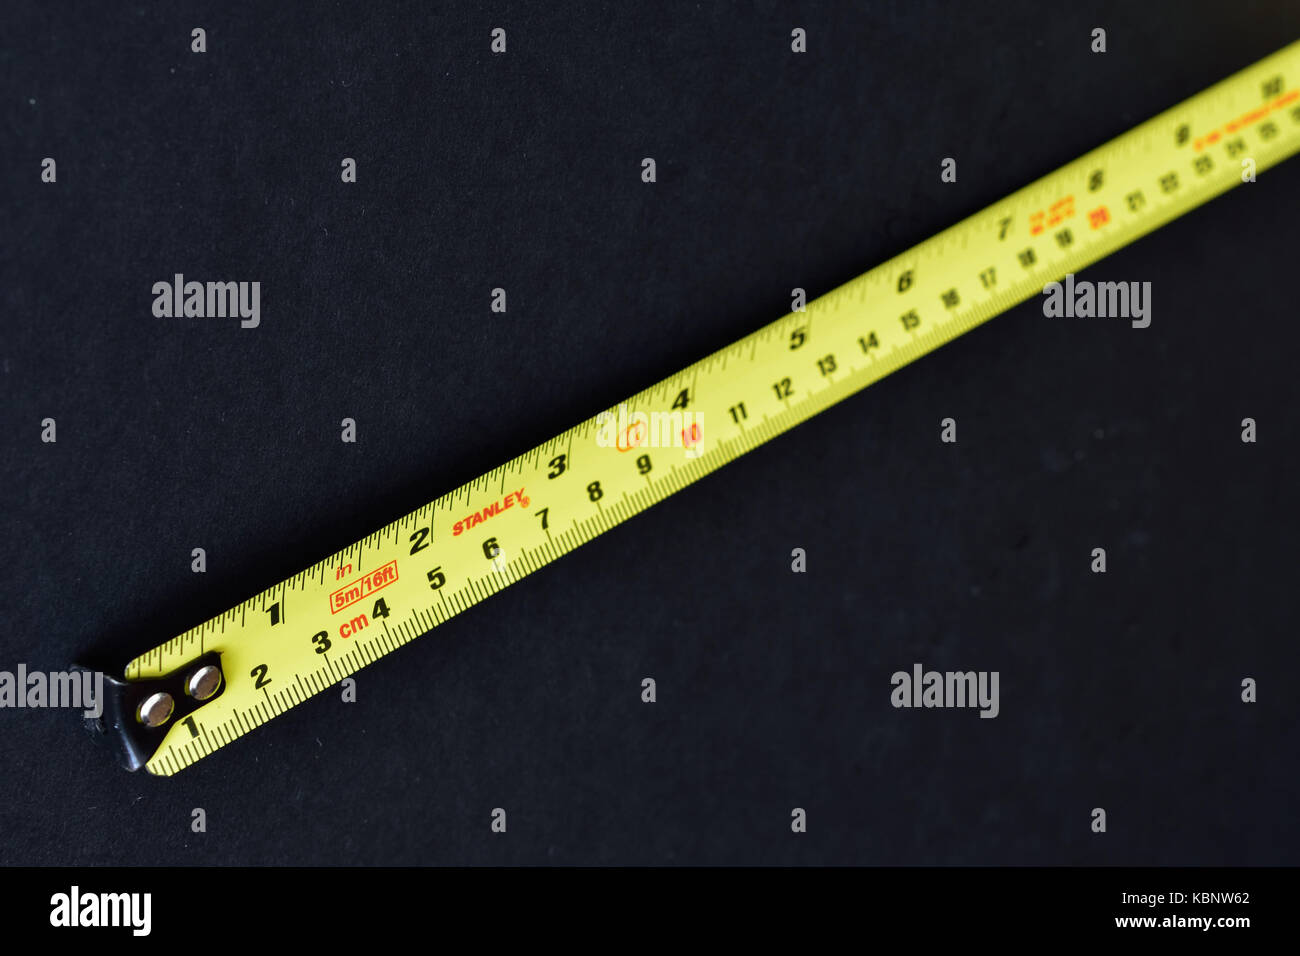 https://c8.alamy.com/comp/KBNW62/yellow-stanley-steel-tape-measure-on-black-background-KBNW62.jpg